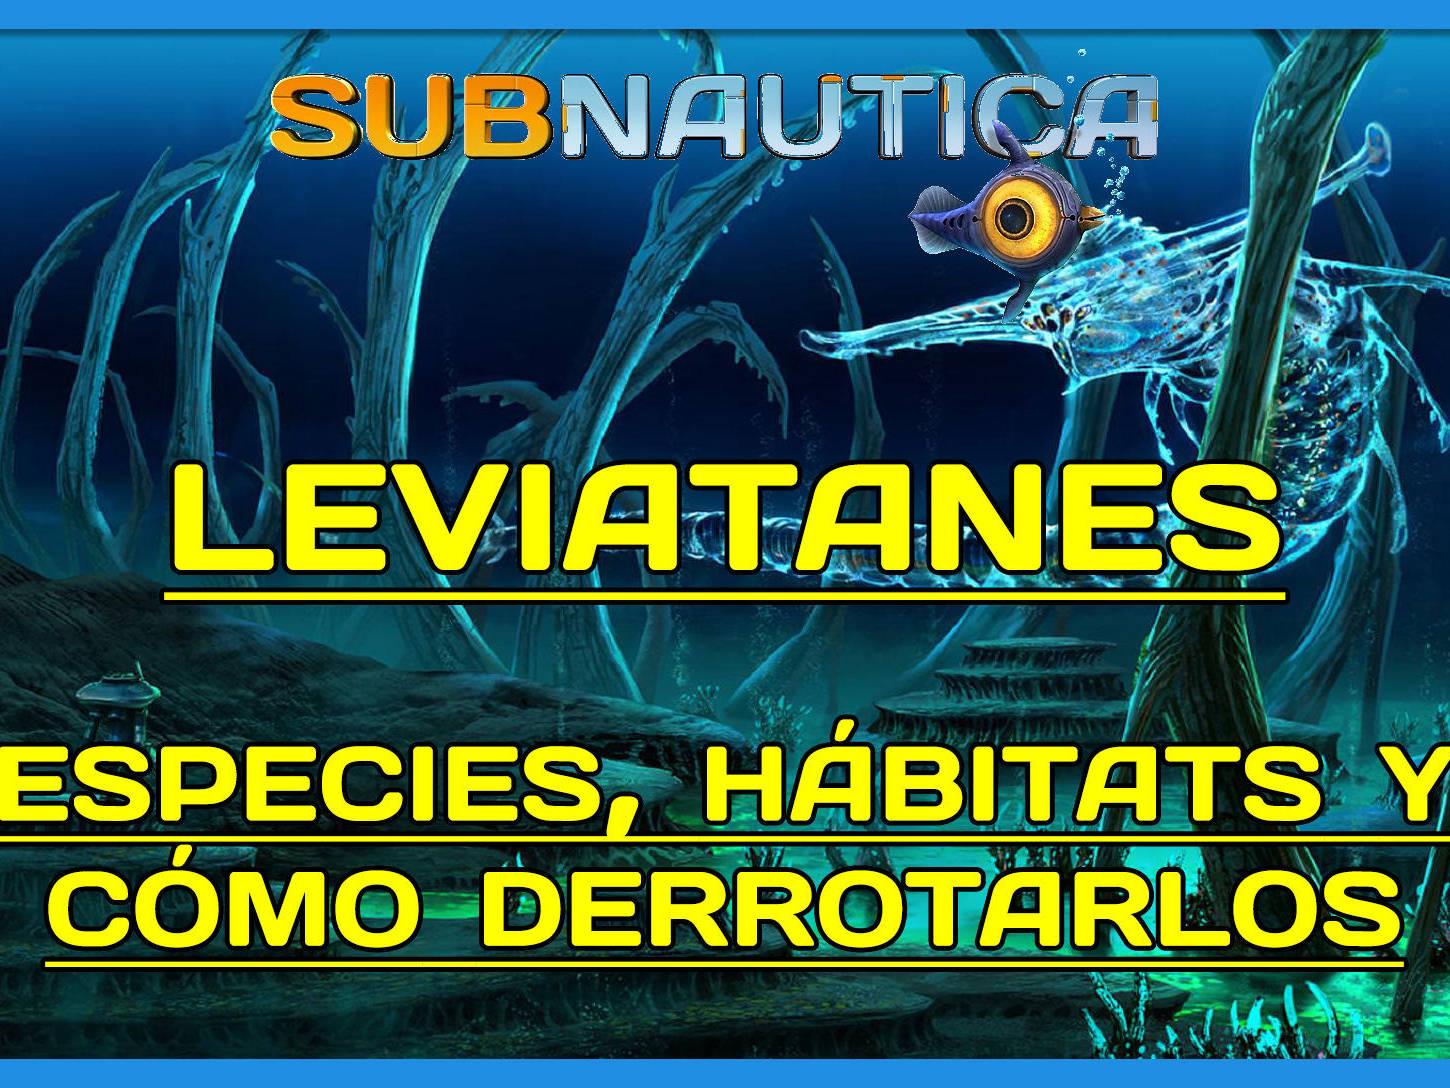 Os leviathans de Subnautica #SextaDoOffDay